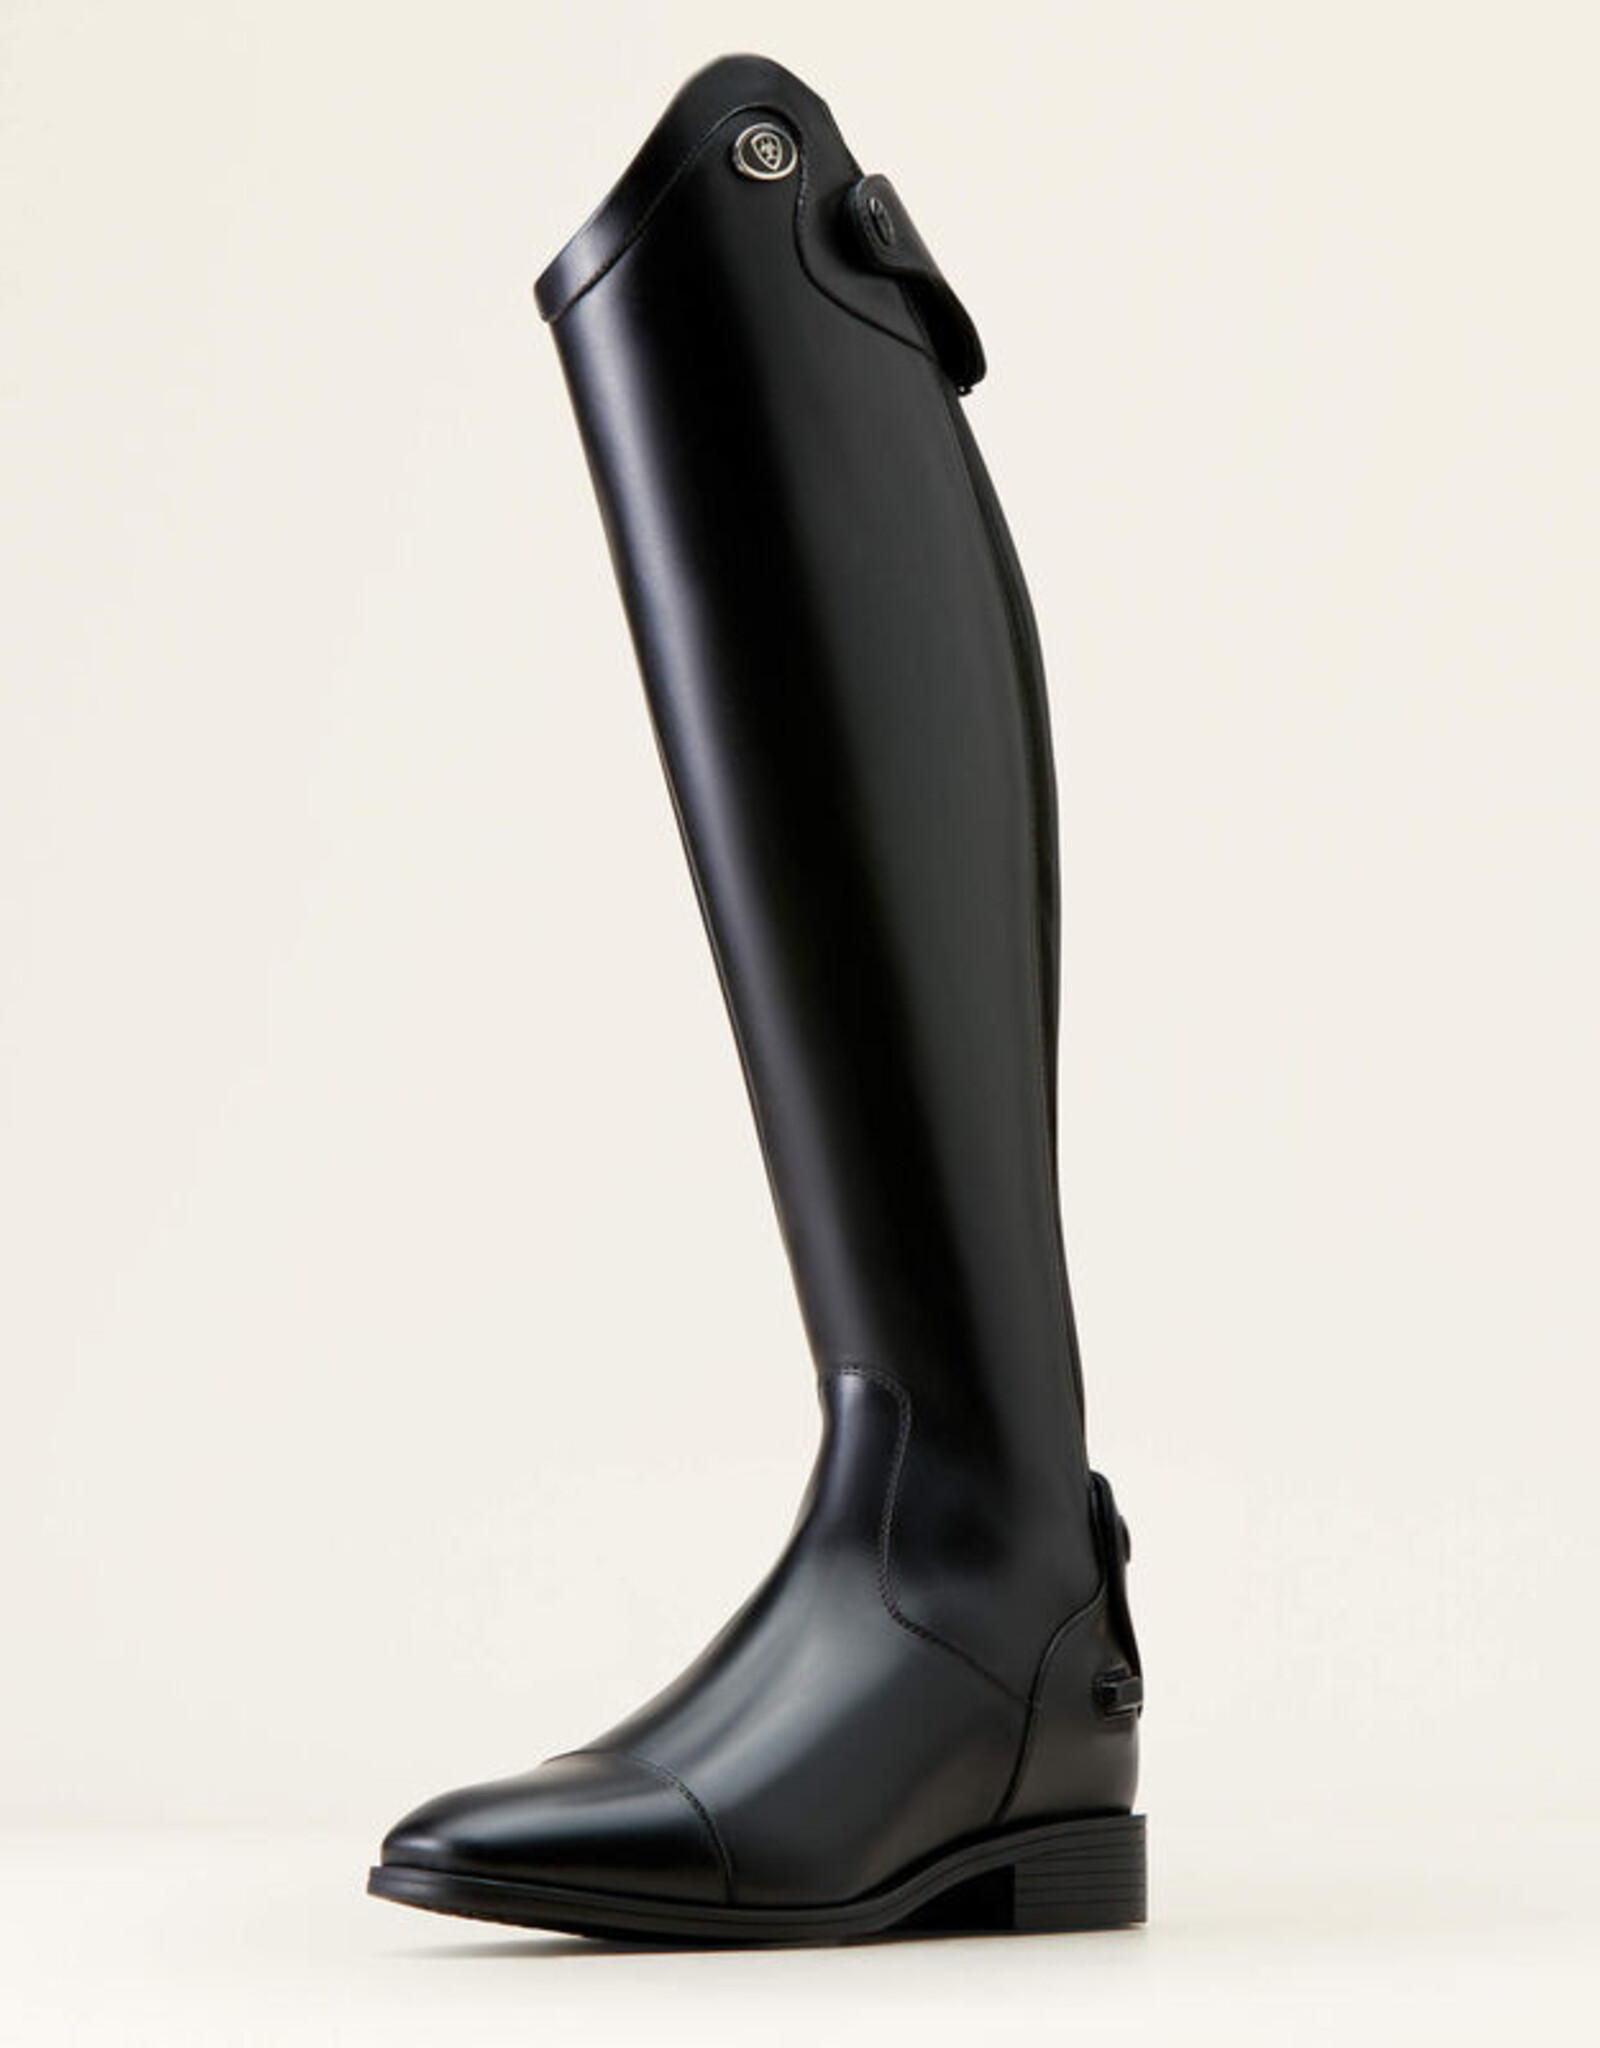 Ariat Ladies' Ravello Dress Boot